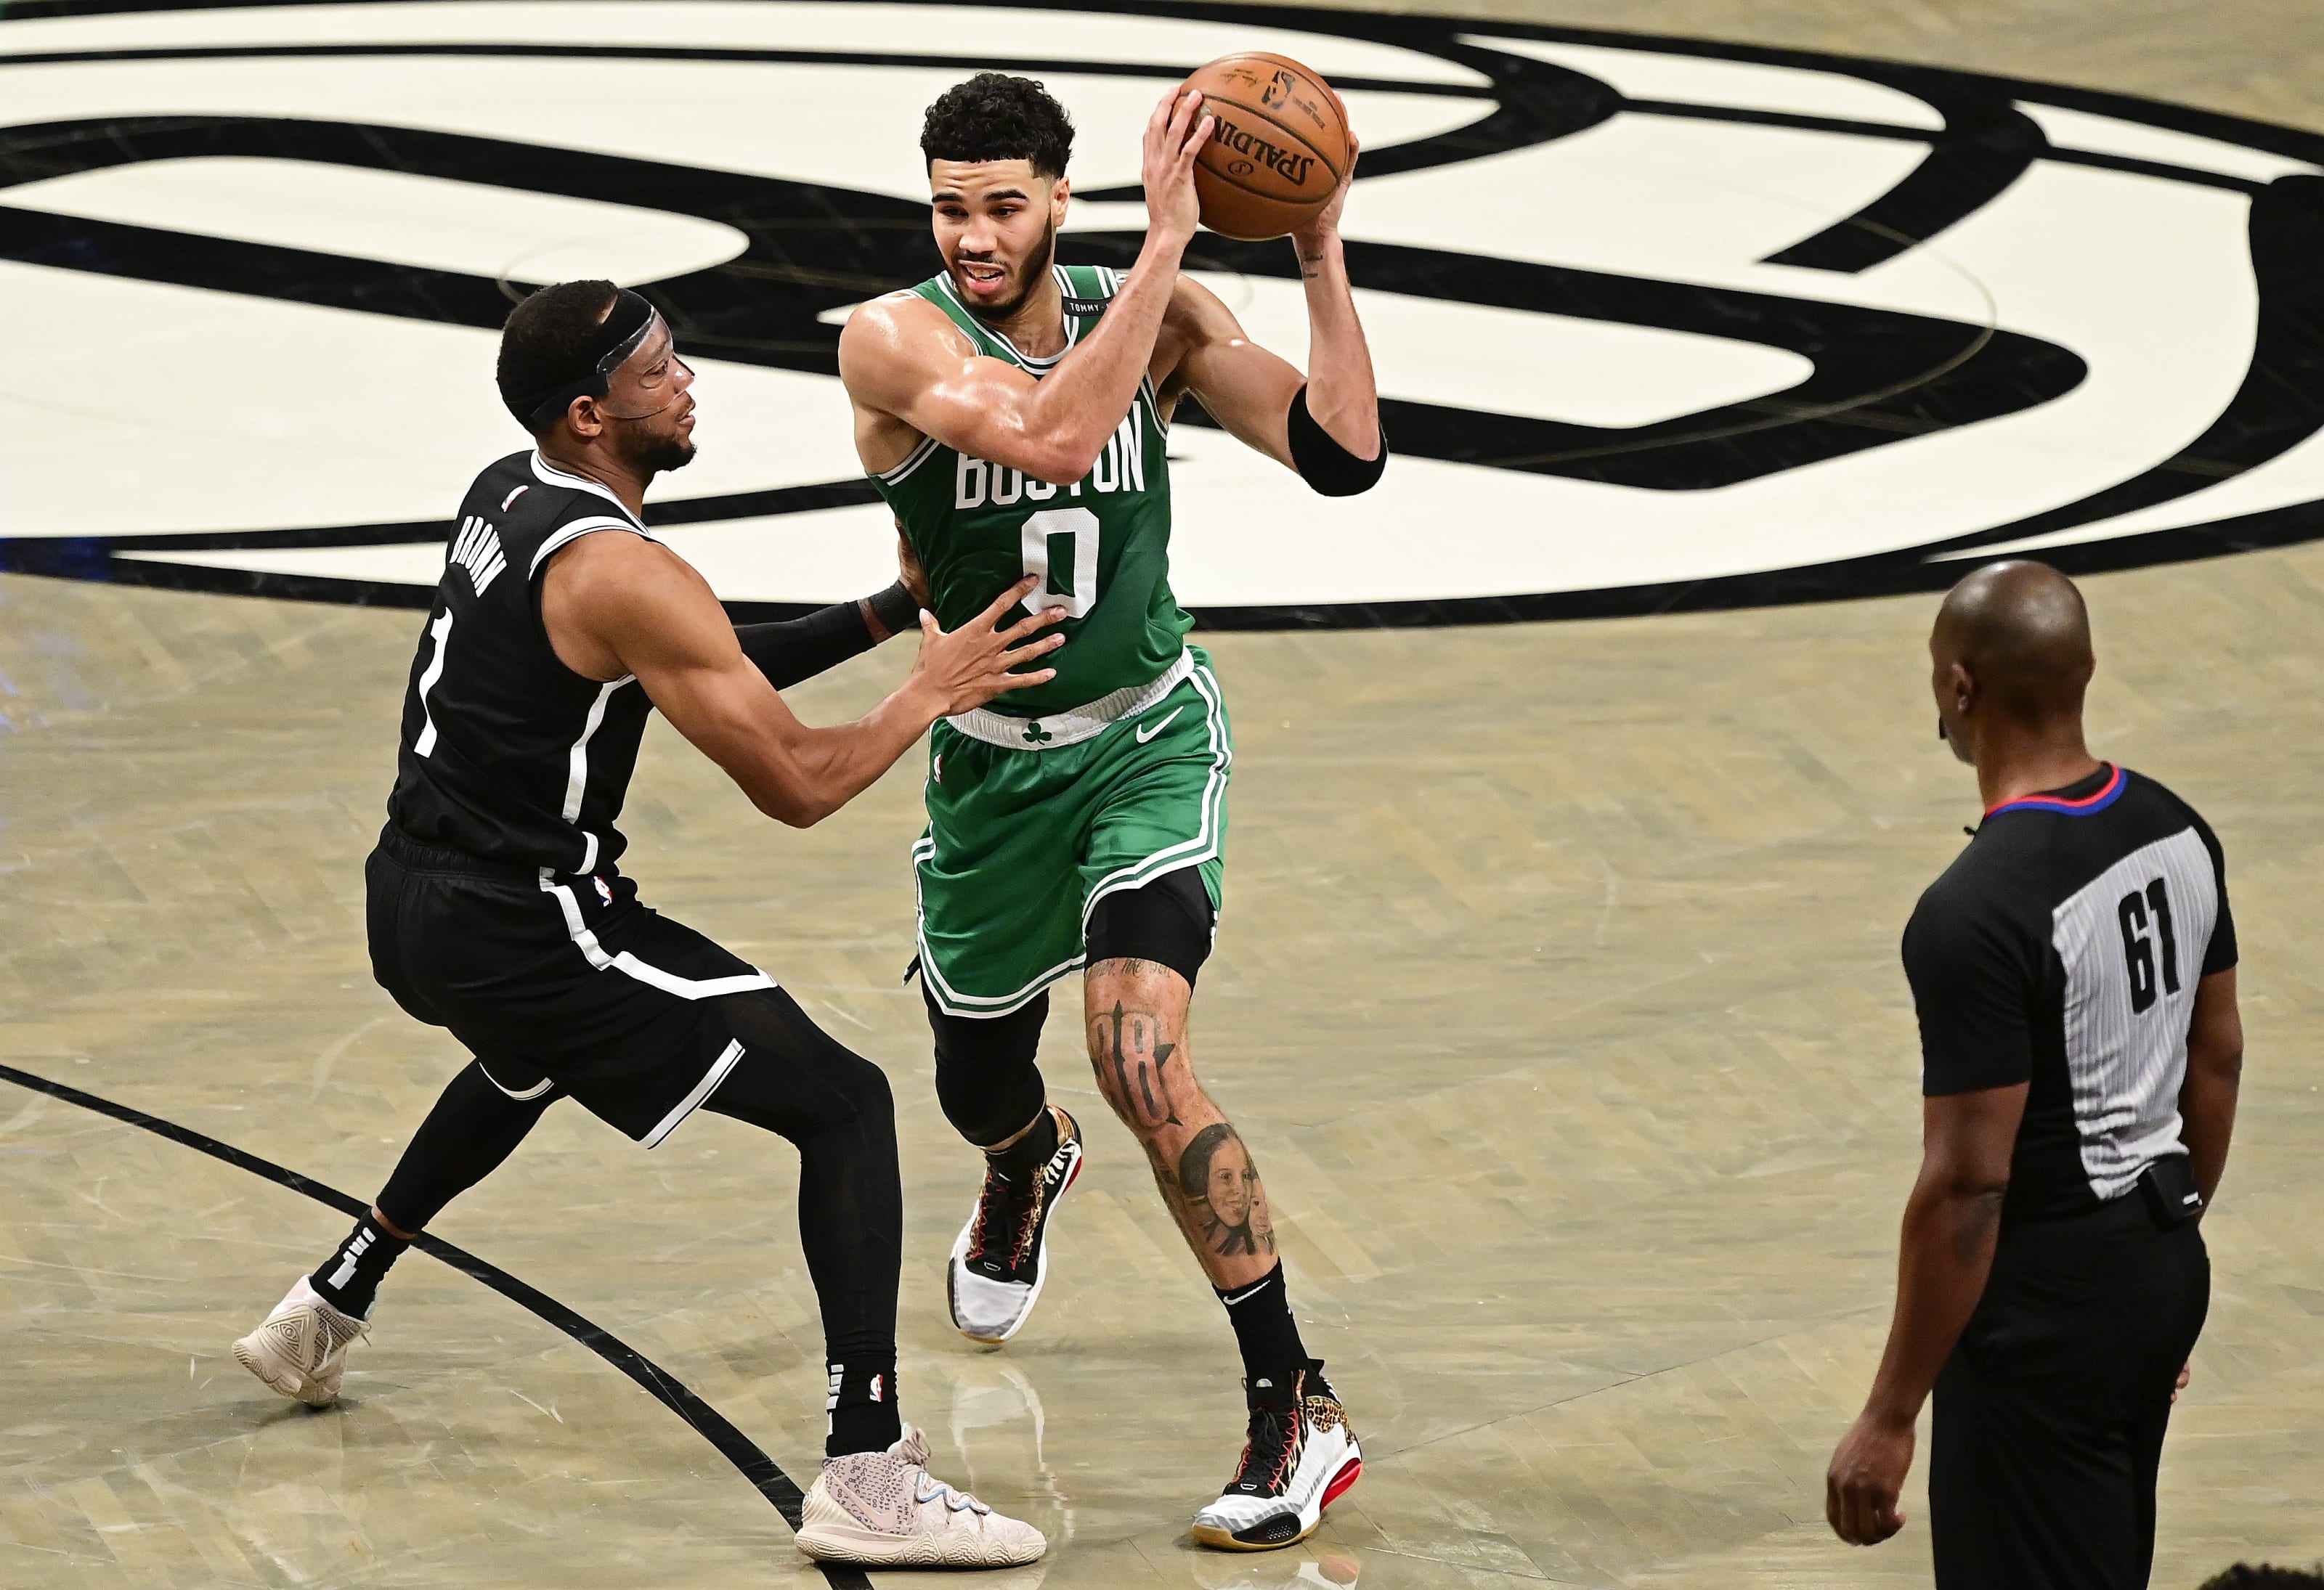 Gallery: Nets vs. Celtics Photo Gallery